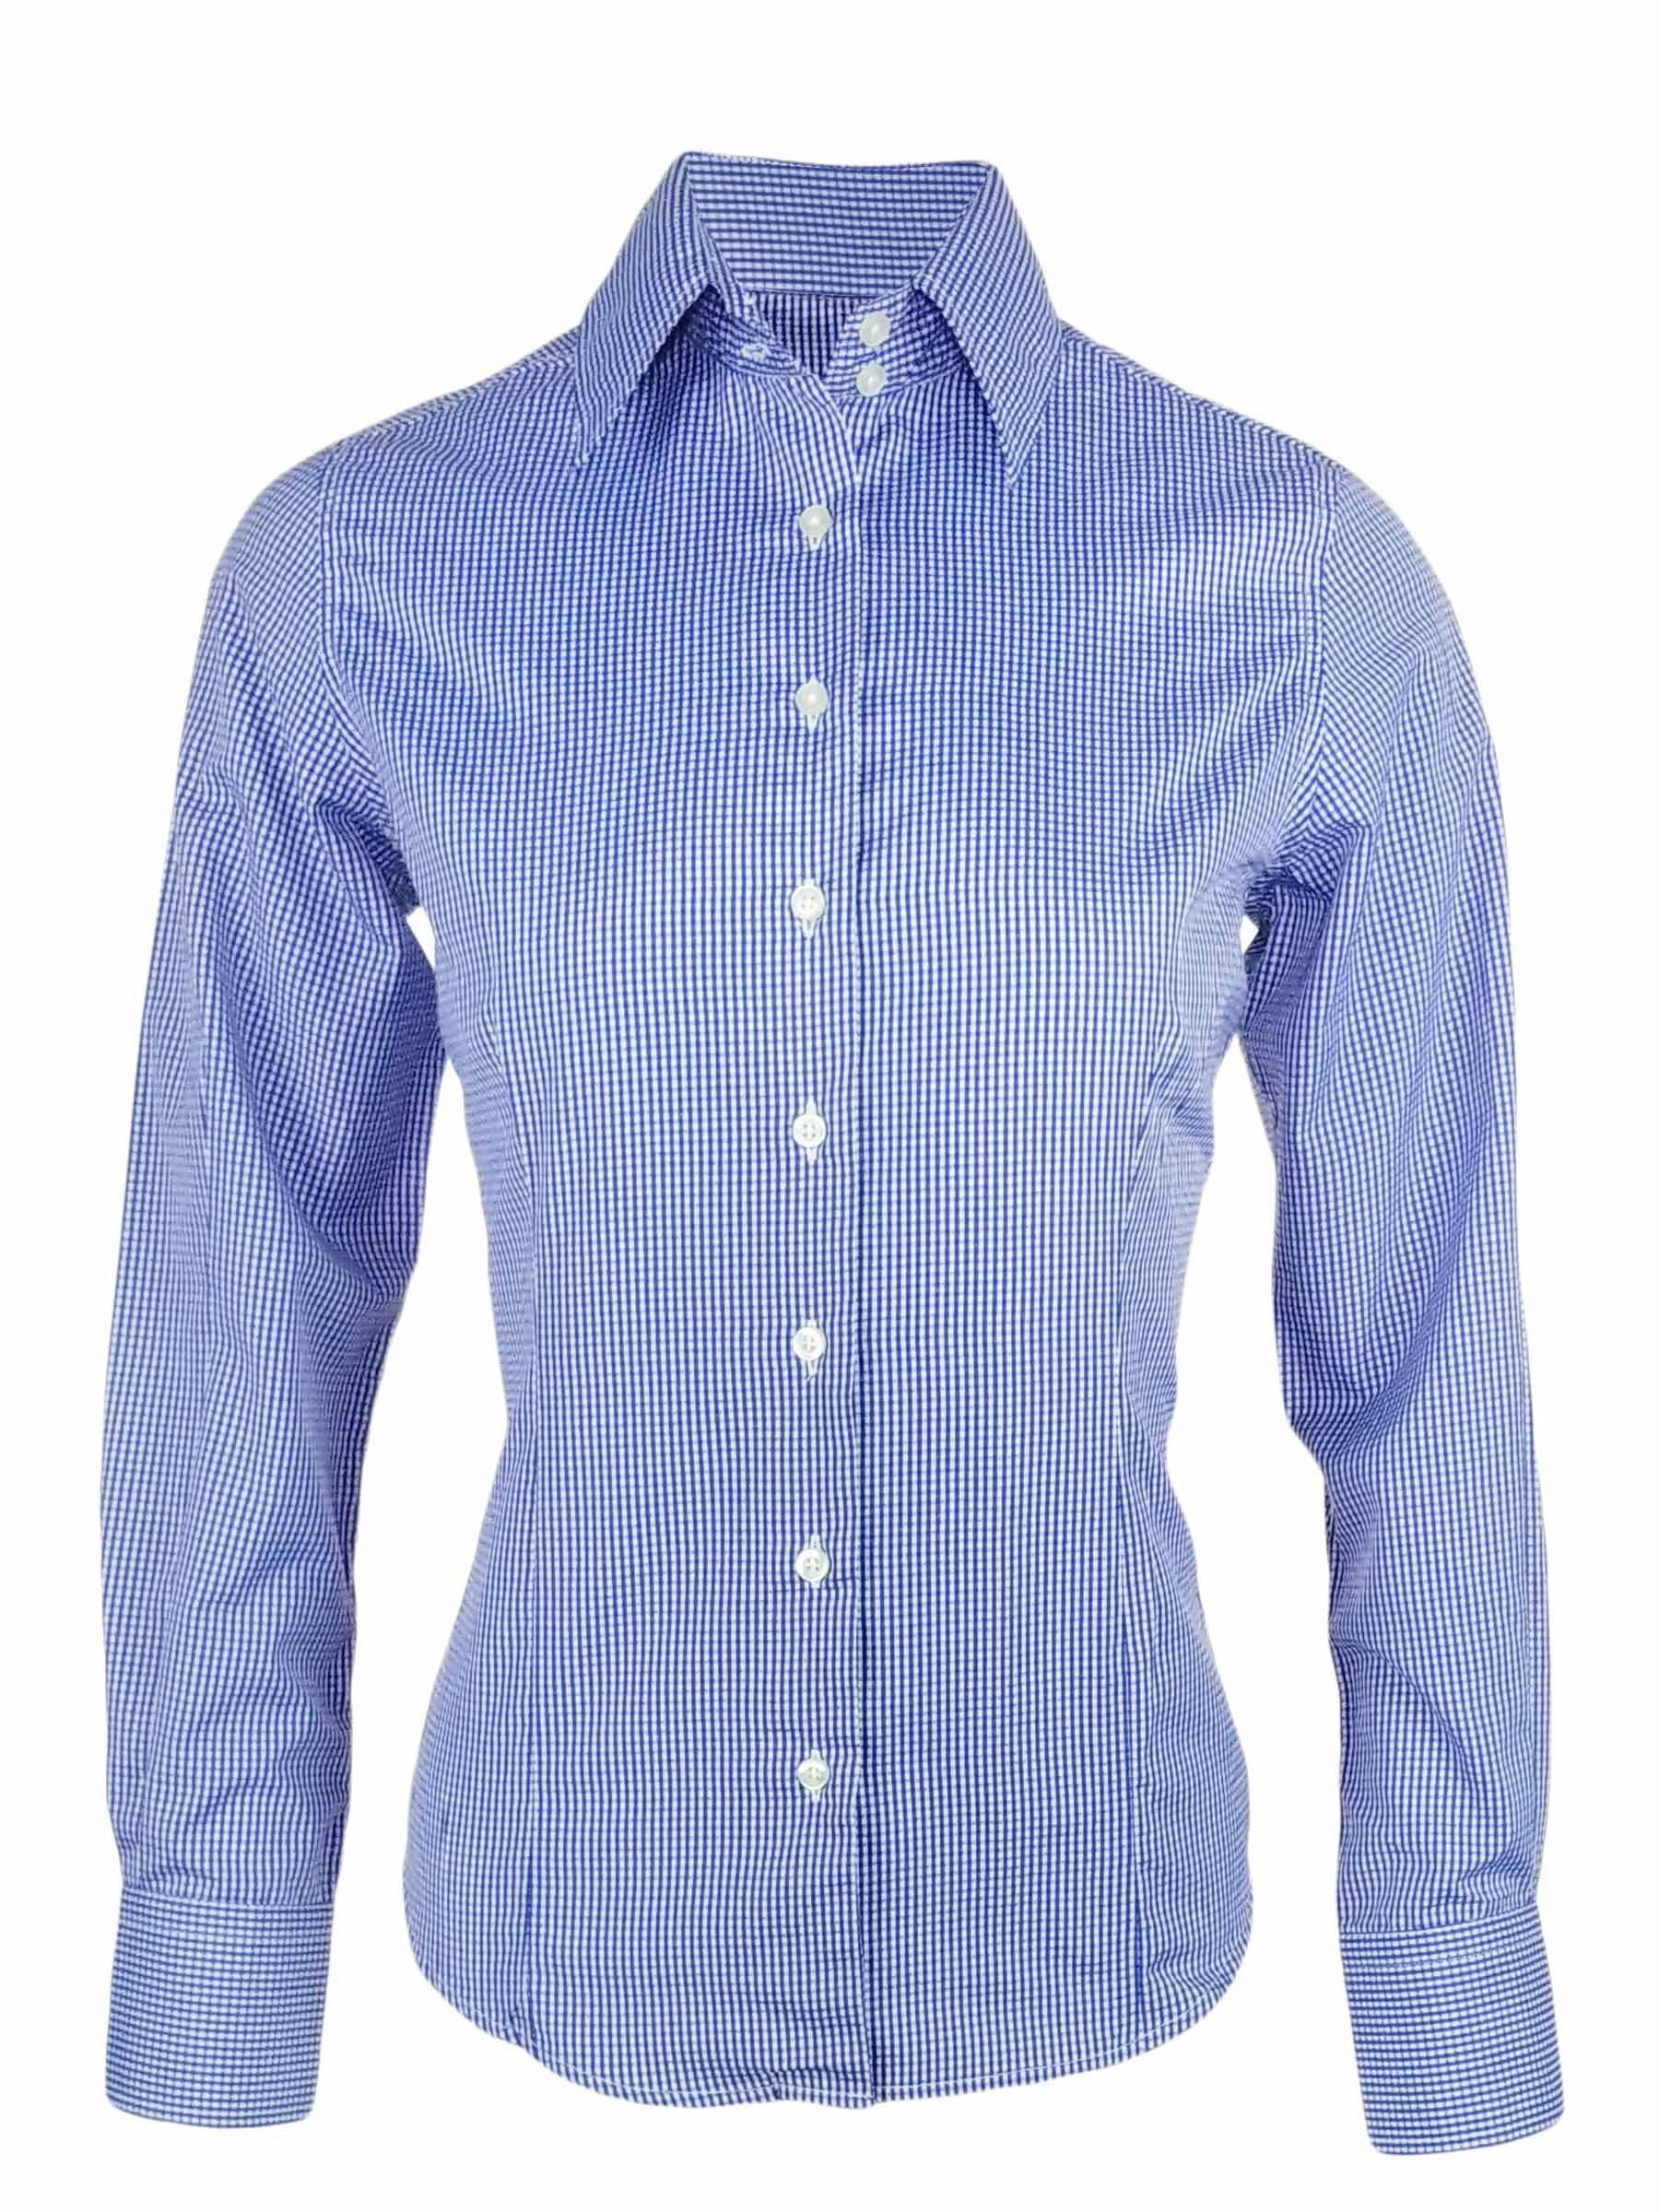 Women's Gingham Shirt - Cobalt Mini Gingham Check Shirt Long Sleeve ...